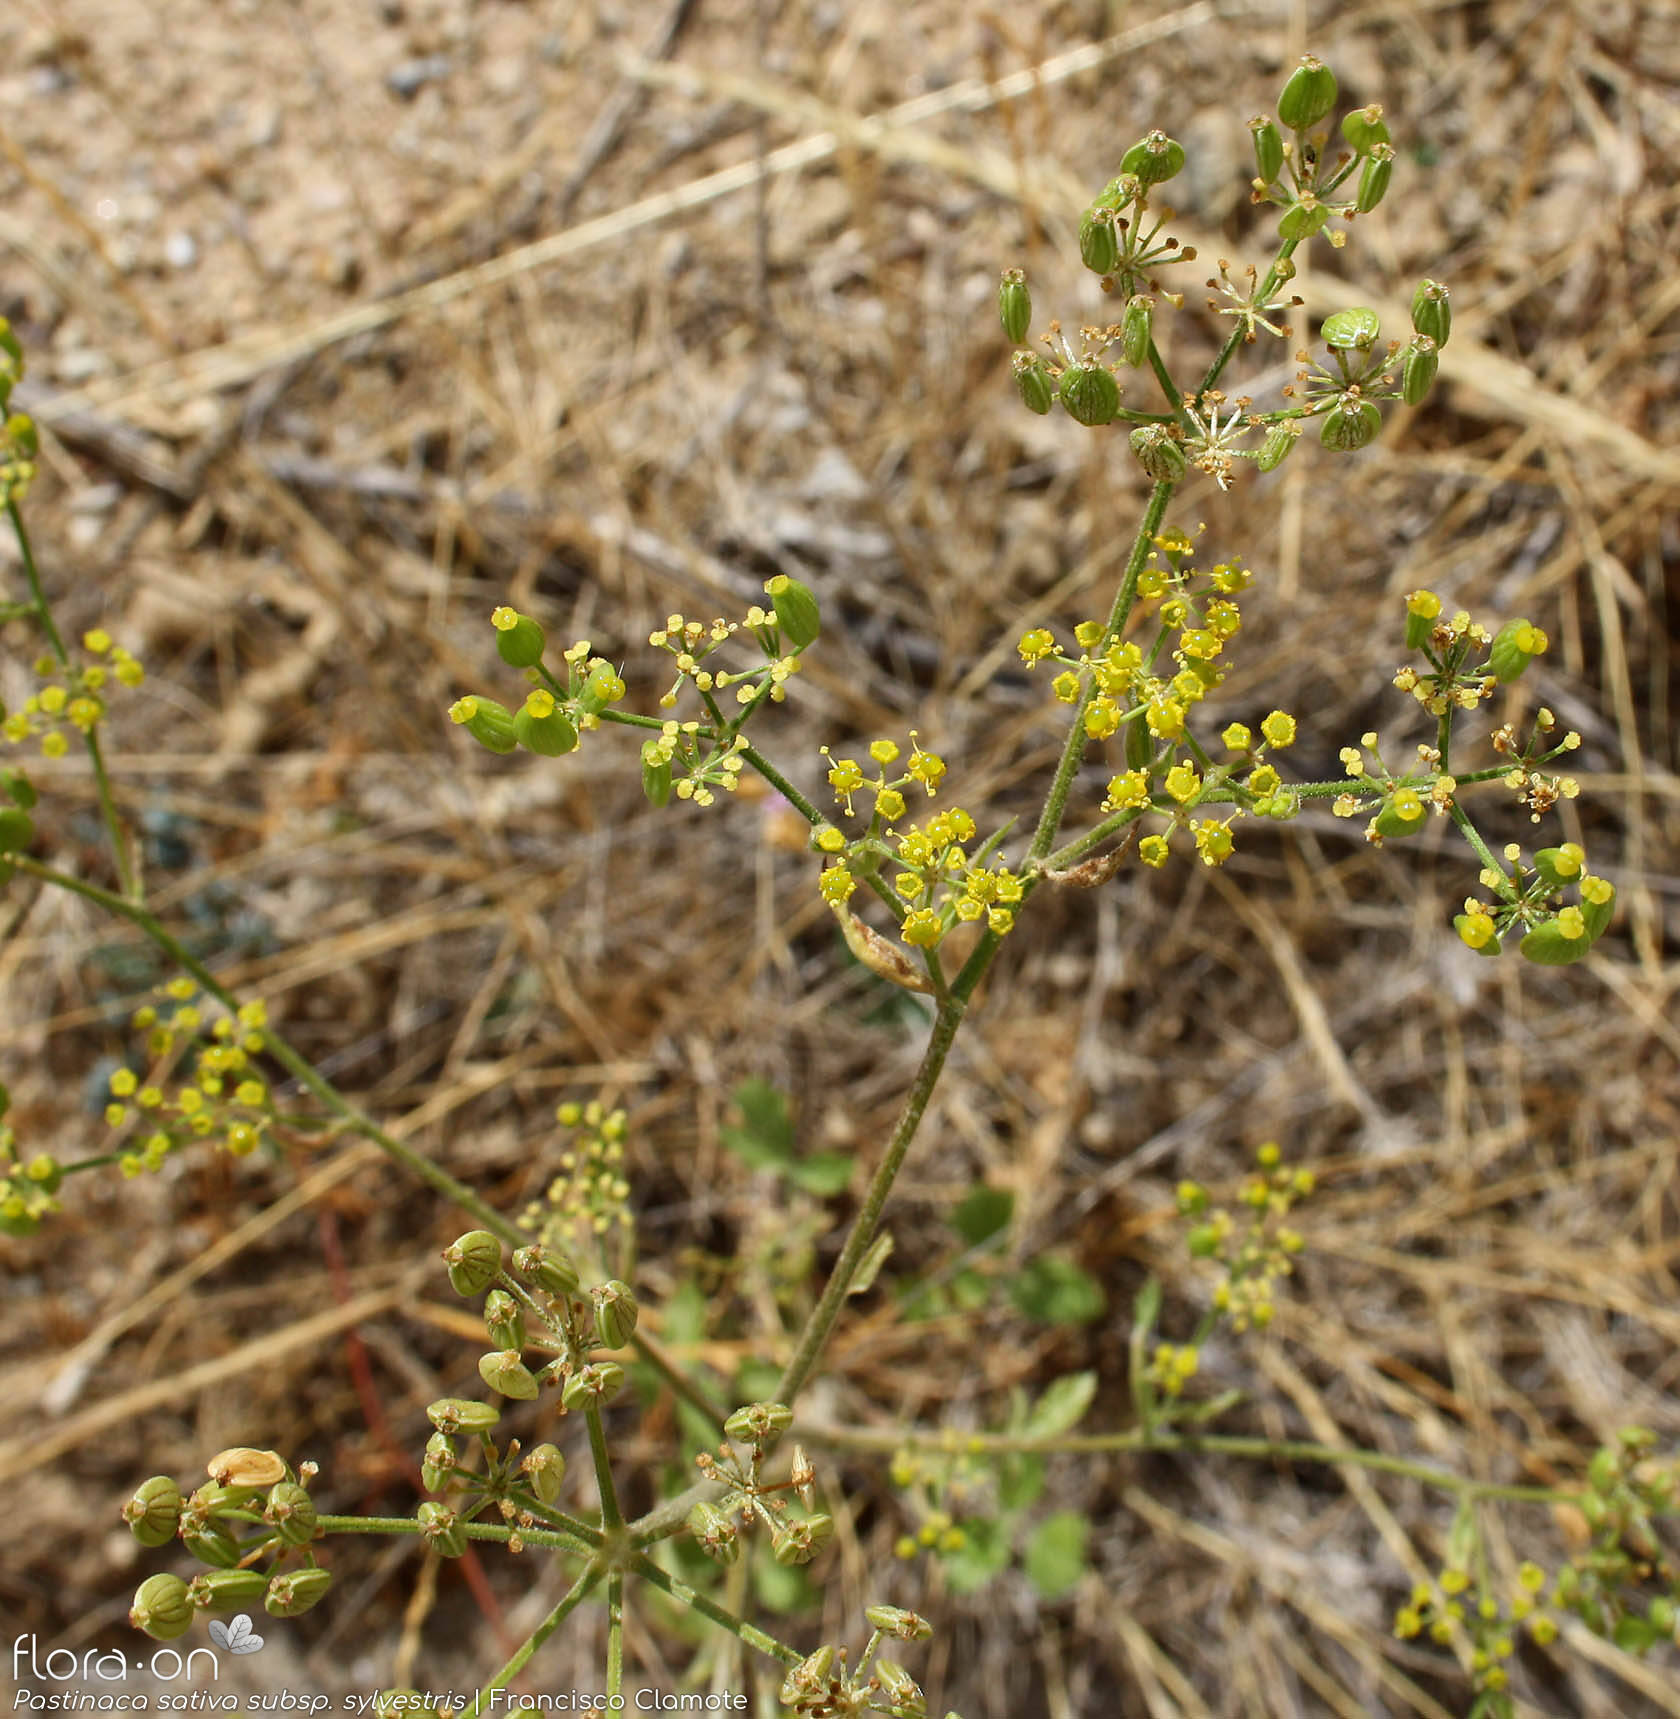 Pastinaca sativa sylvestris - Flor (geral) | Francisco Clamote; CC BY-NC 4.0